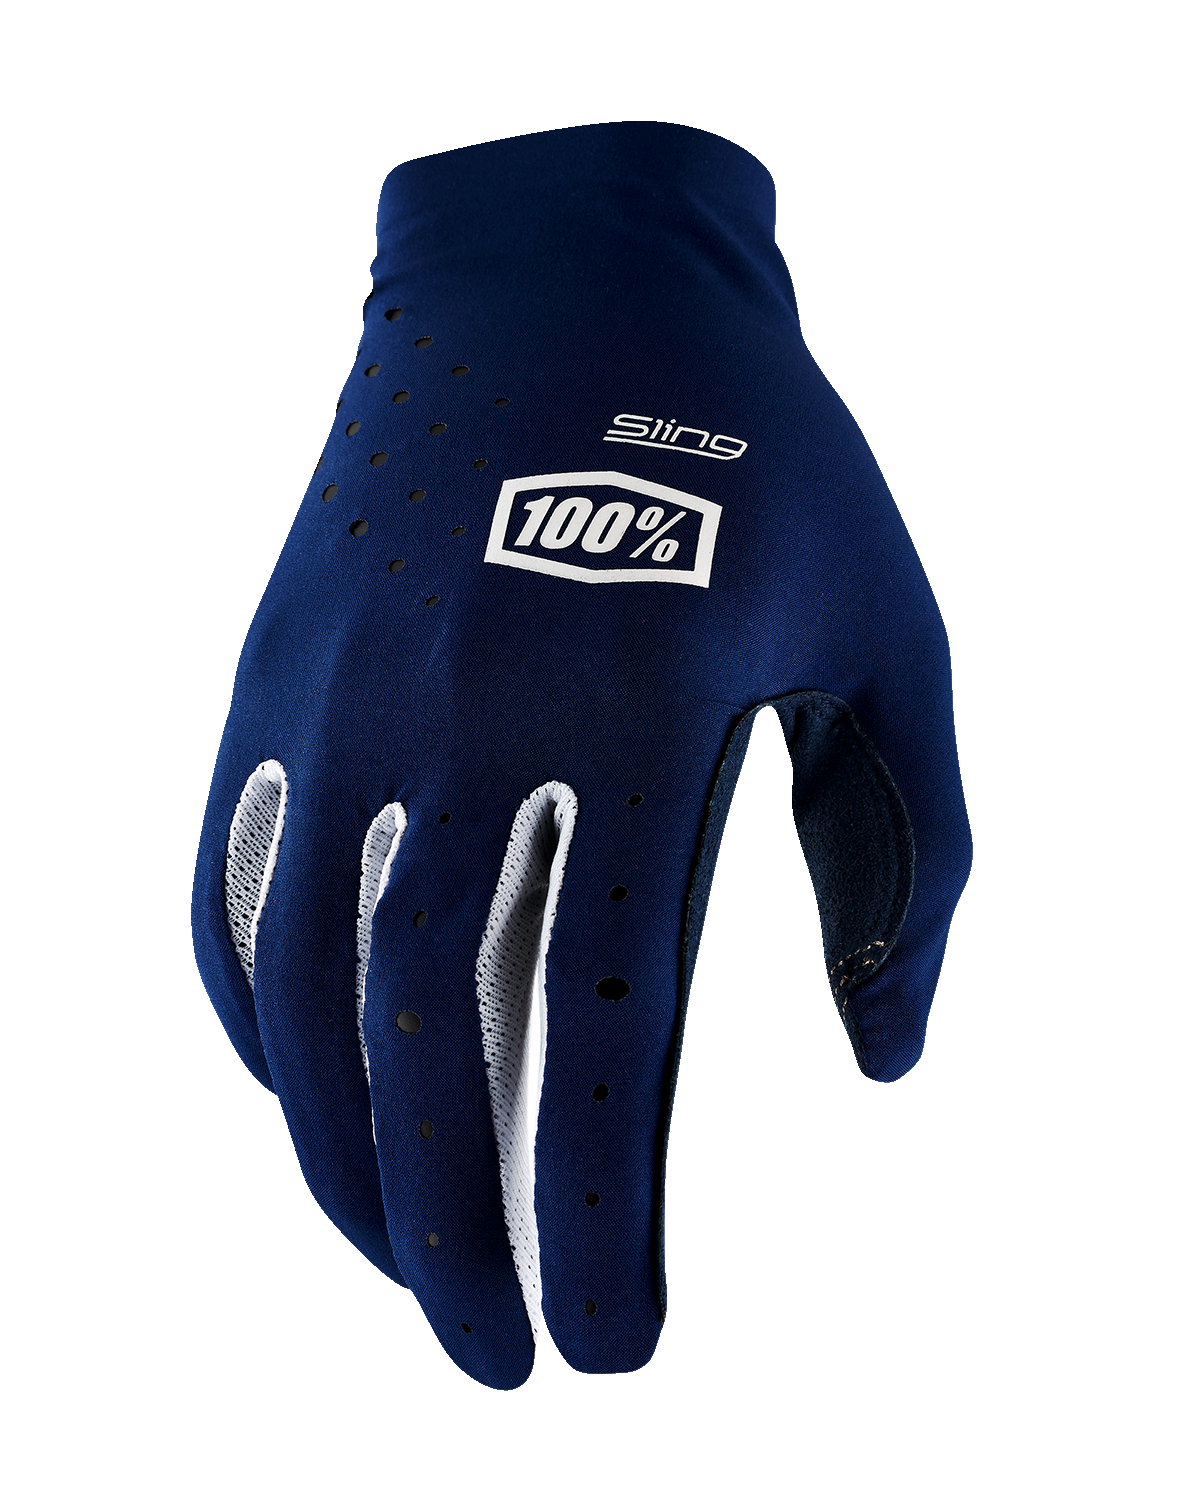 100% Sling MX Gloves - Navy - Small 10023-00010